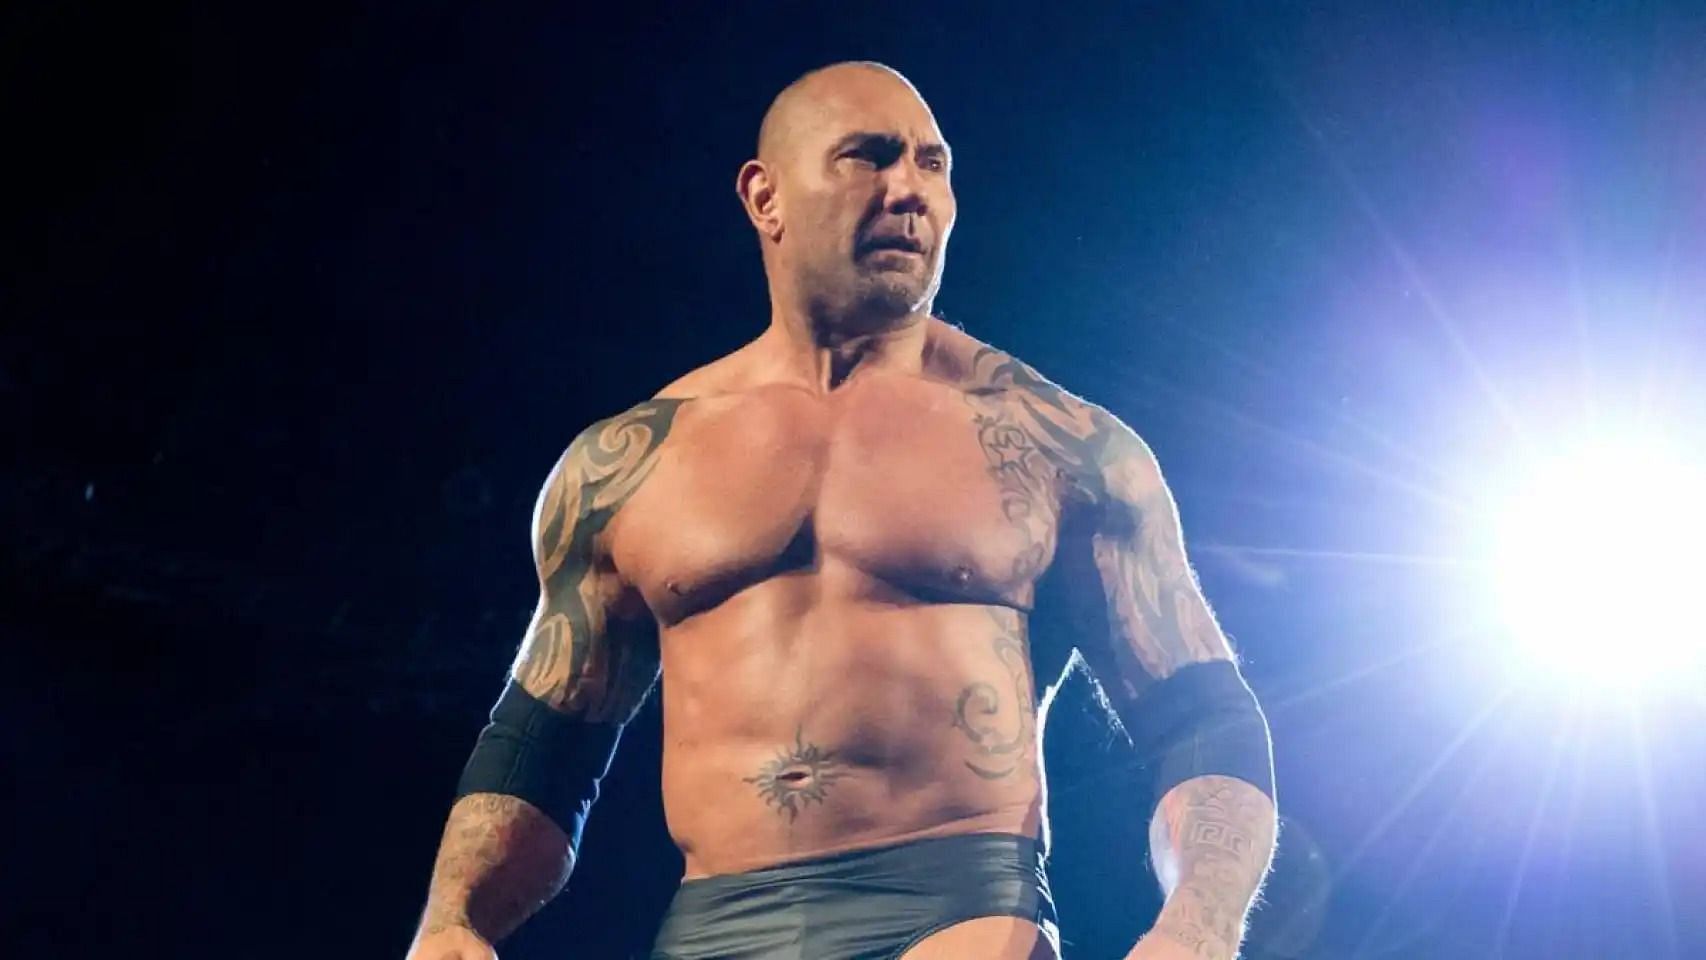 Batista shared a throwback photo on social media